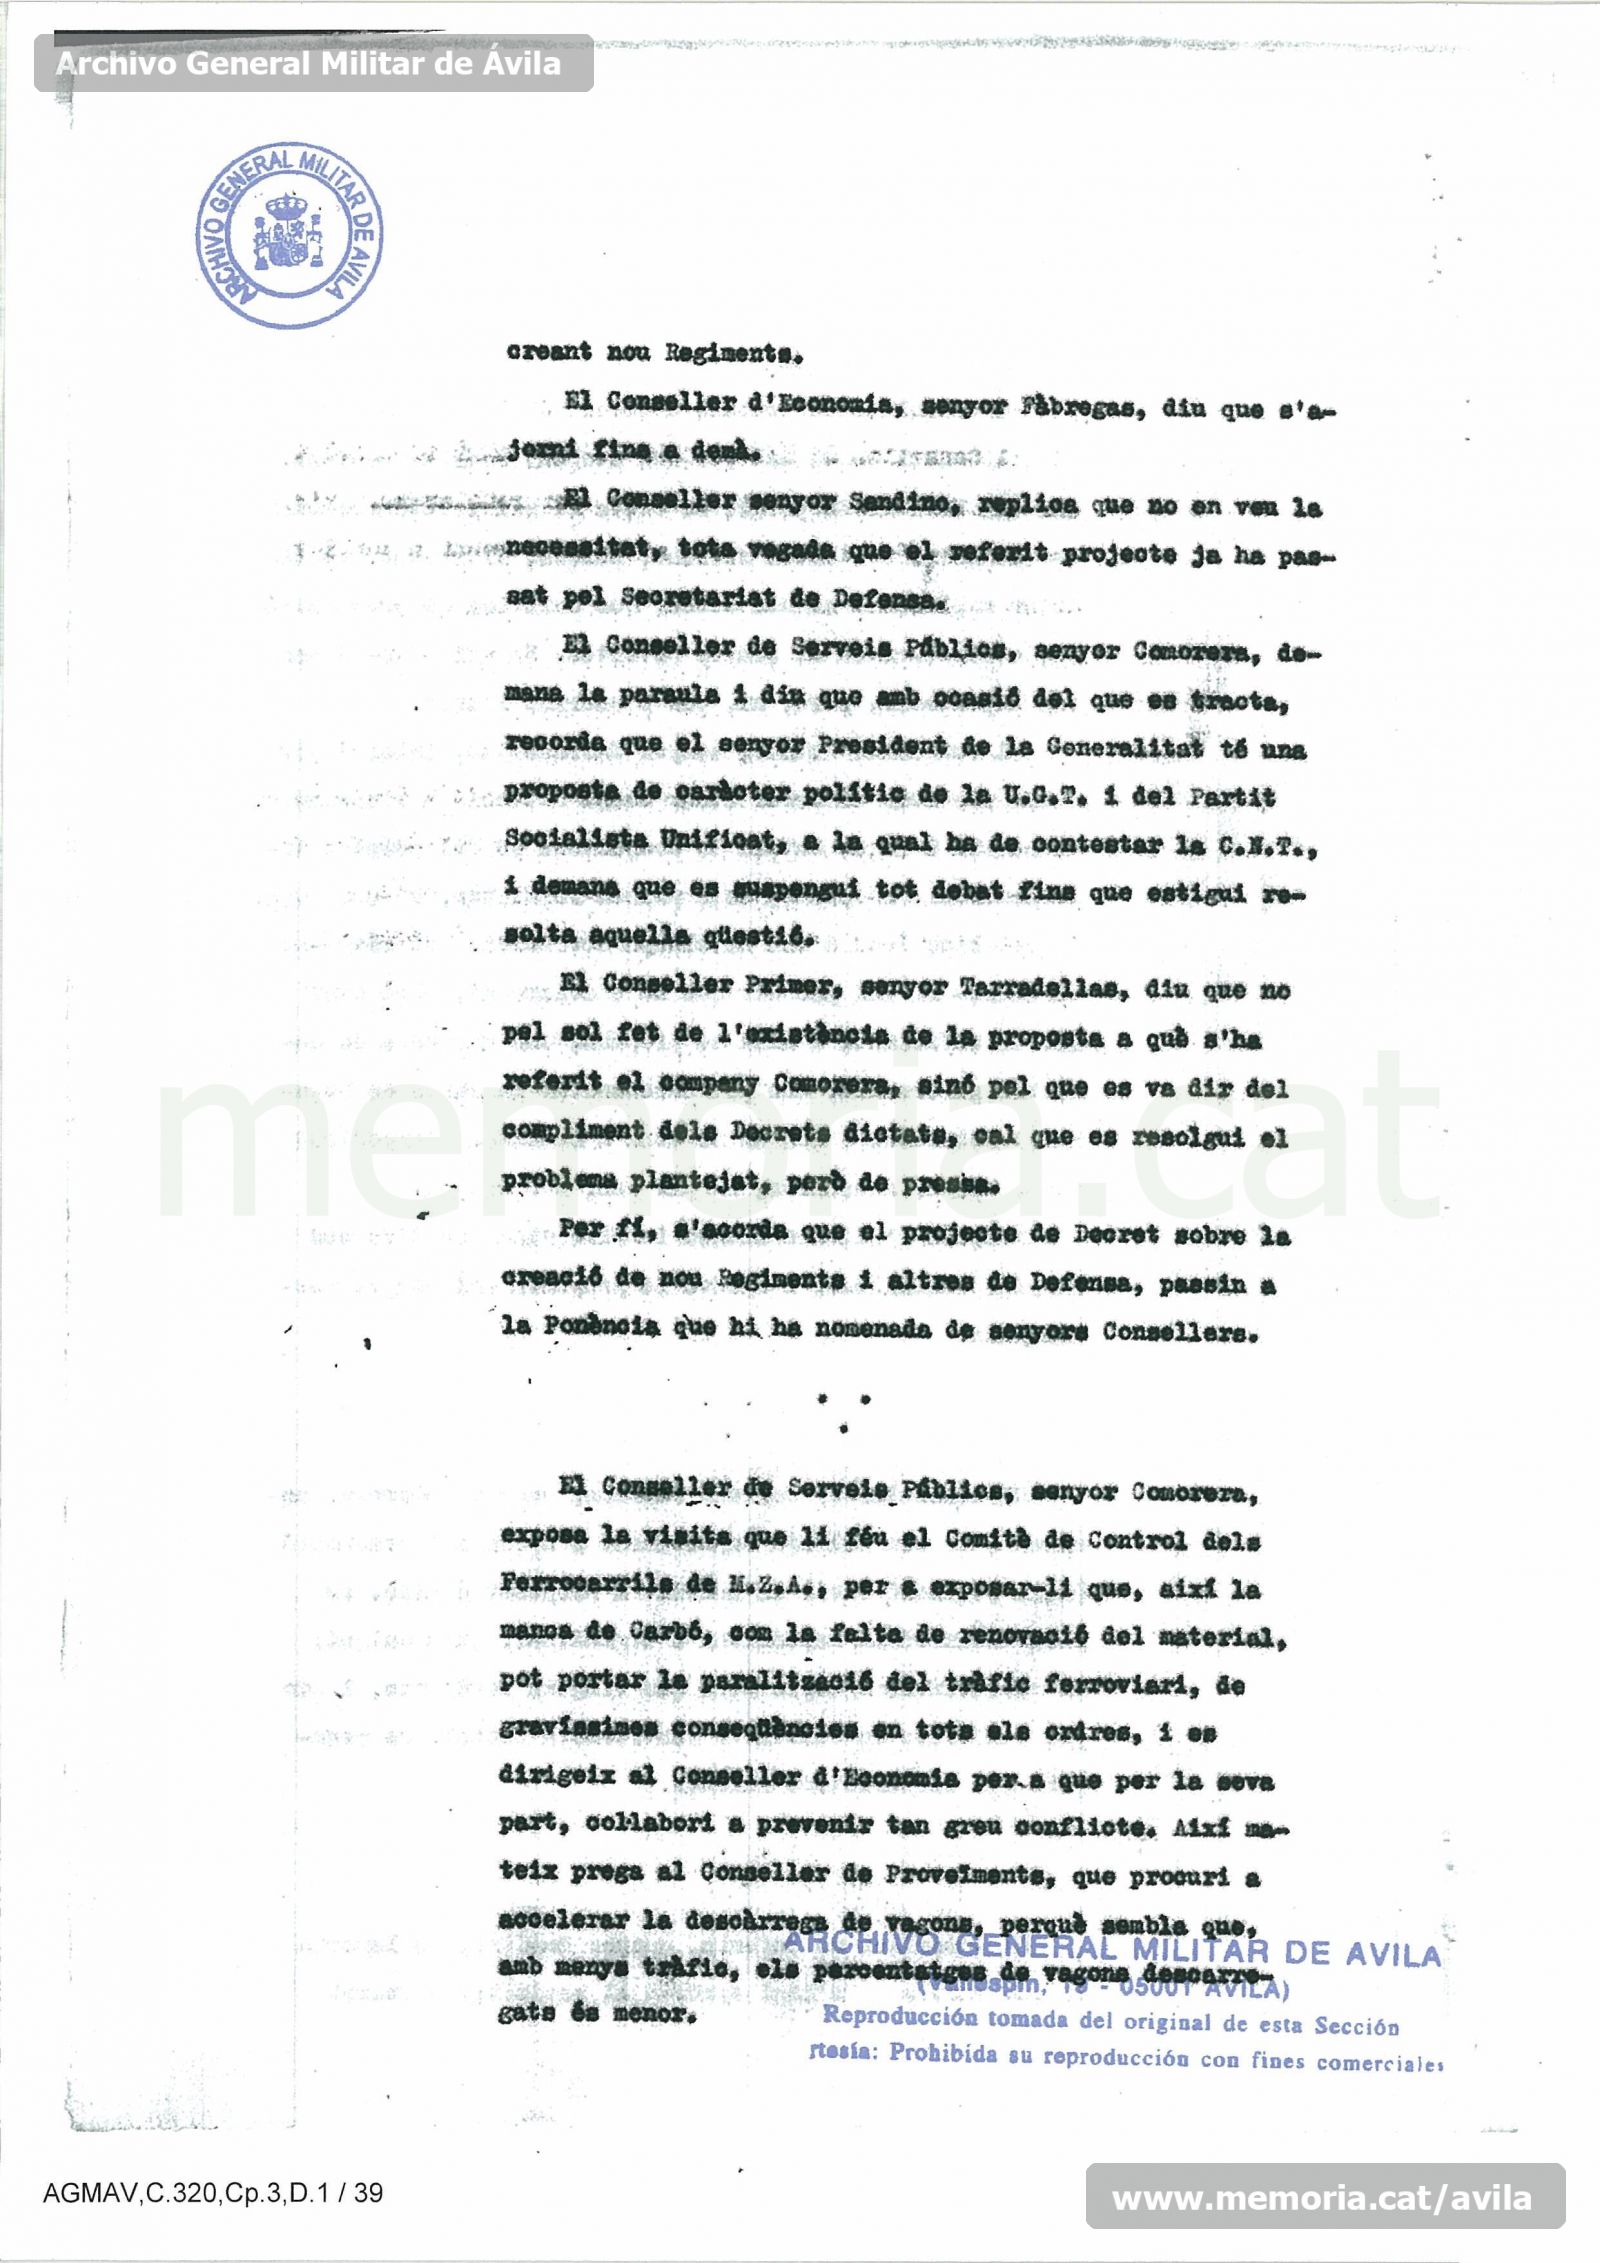 Generalitat page 104